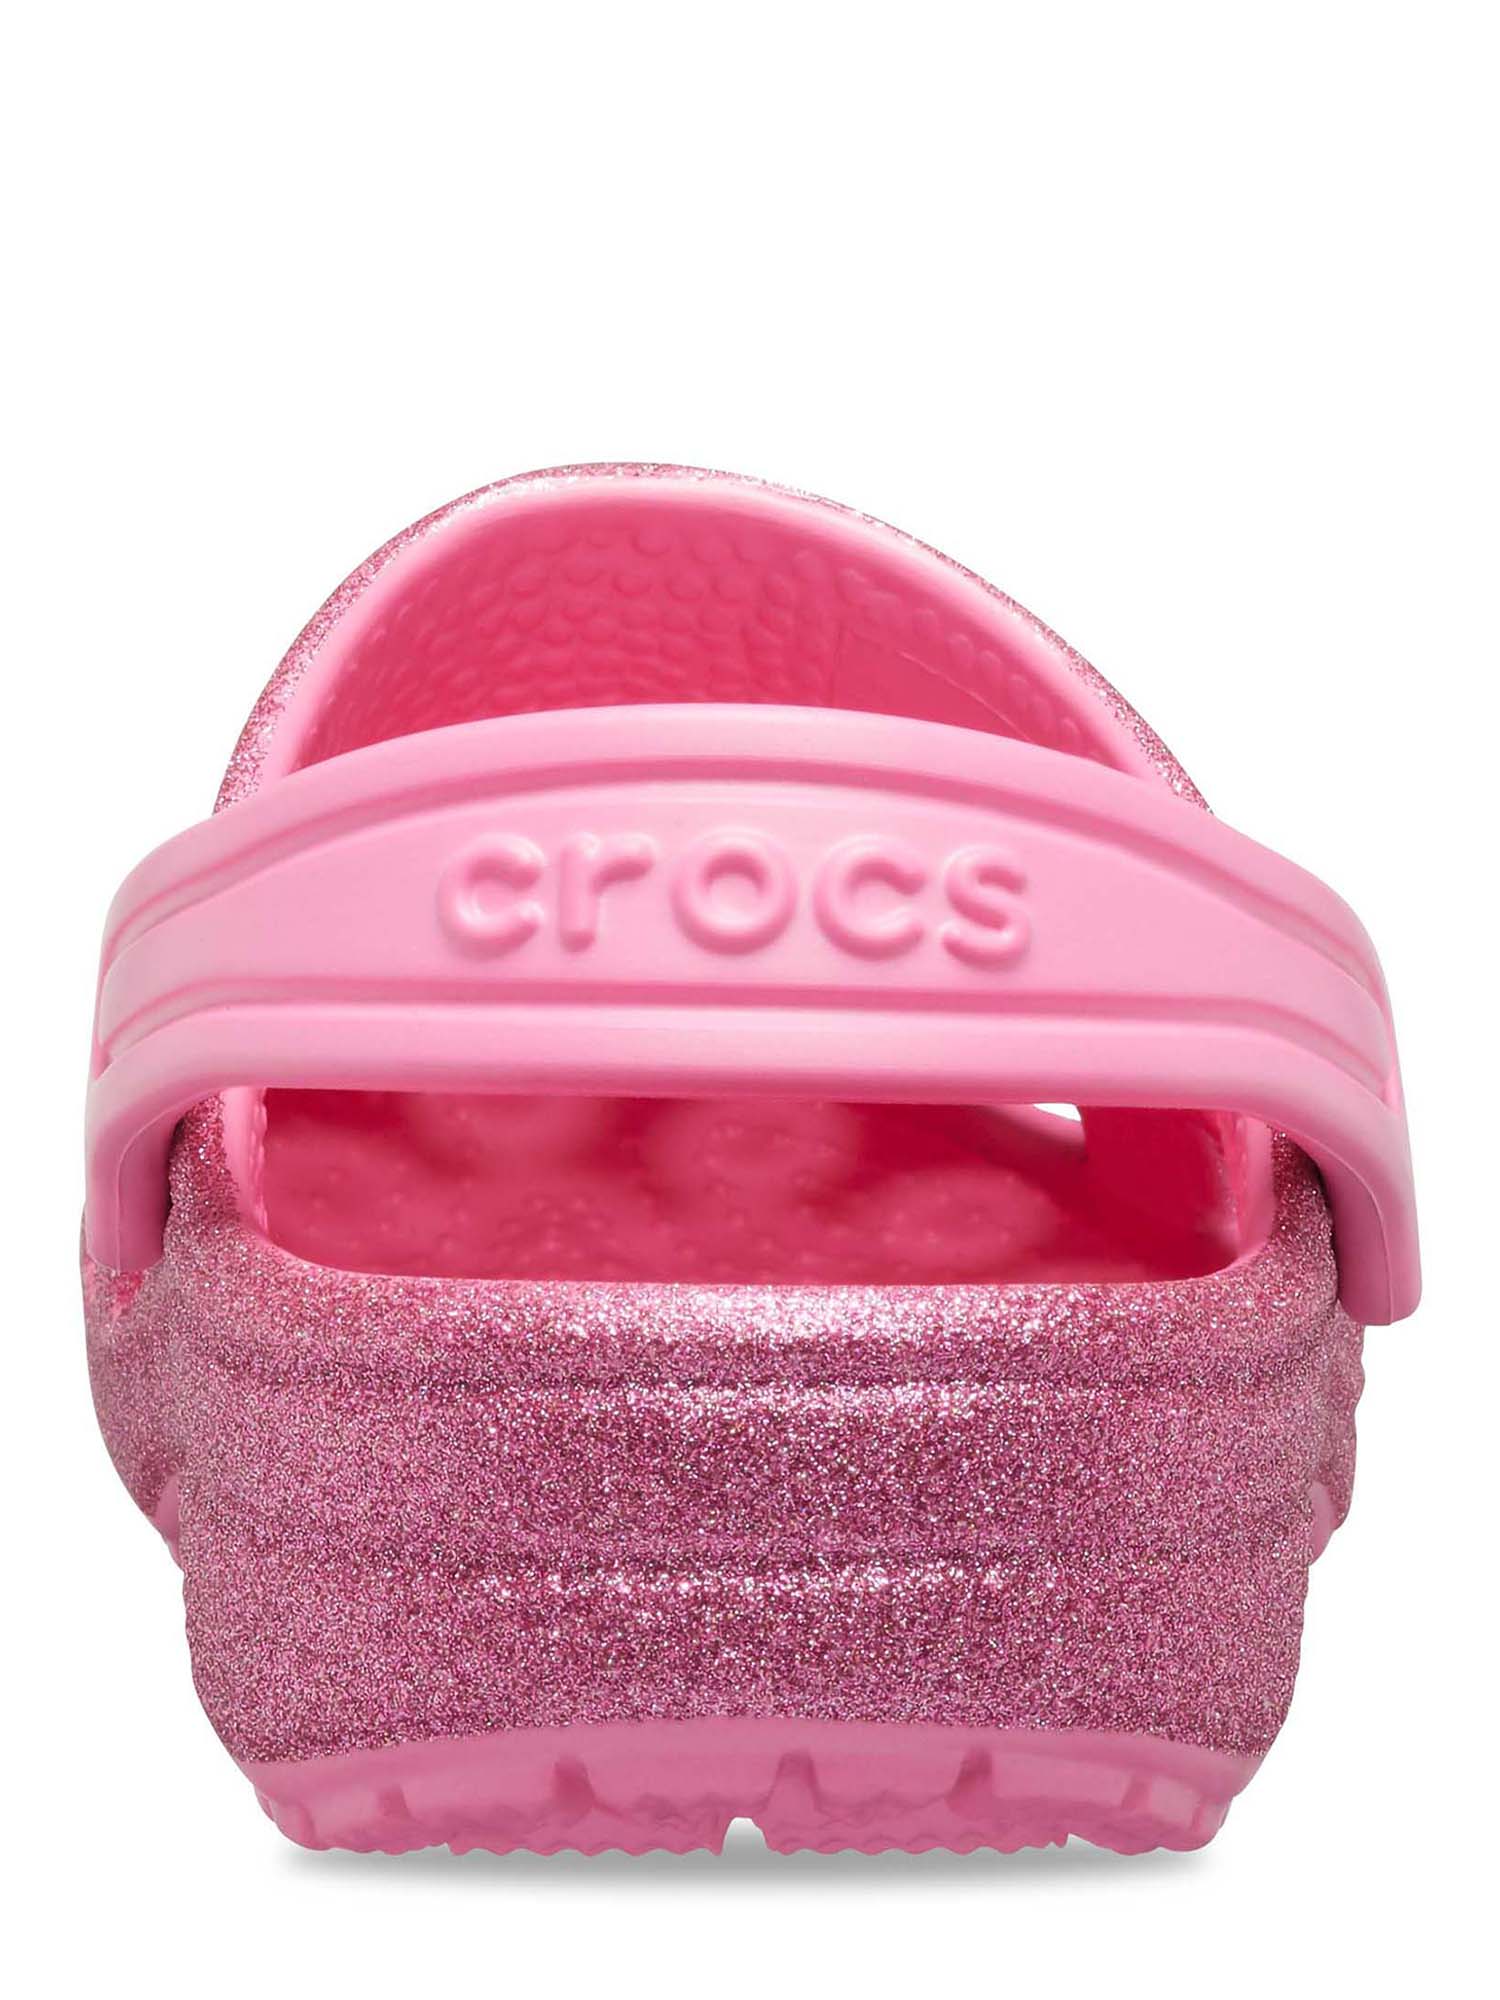 Crocs Toddler & Kids Classic Glitter Clog, Sizes 4-6 - image 4 of 4